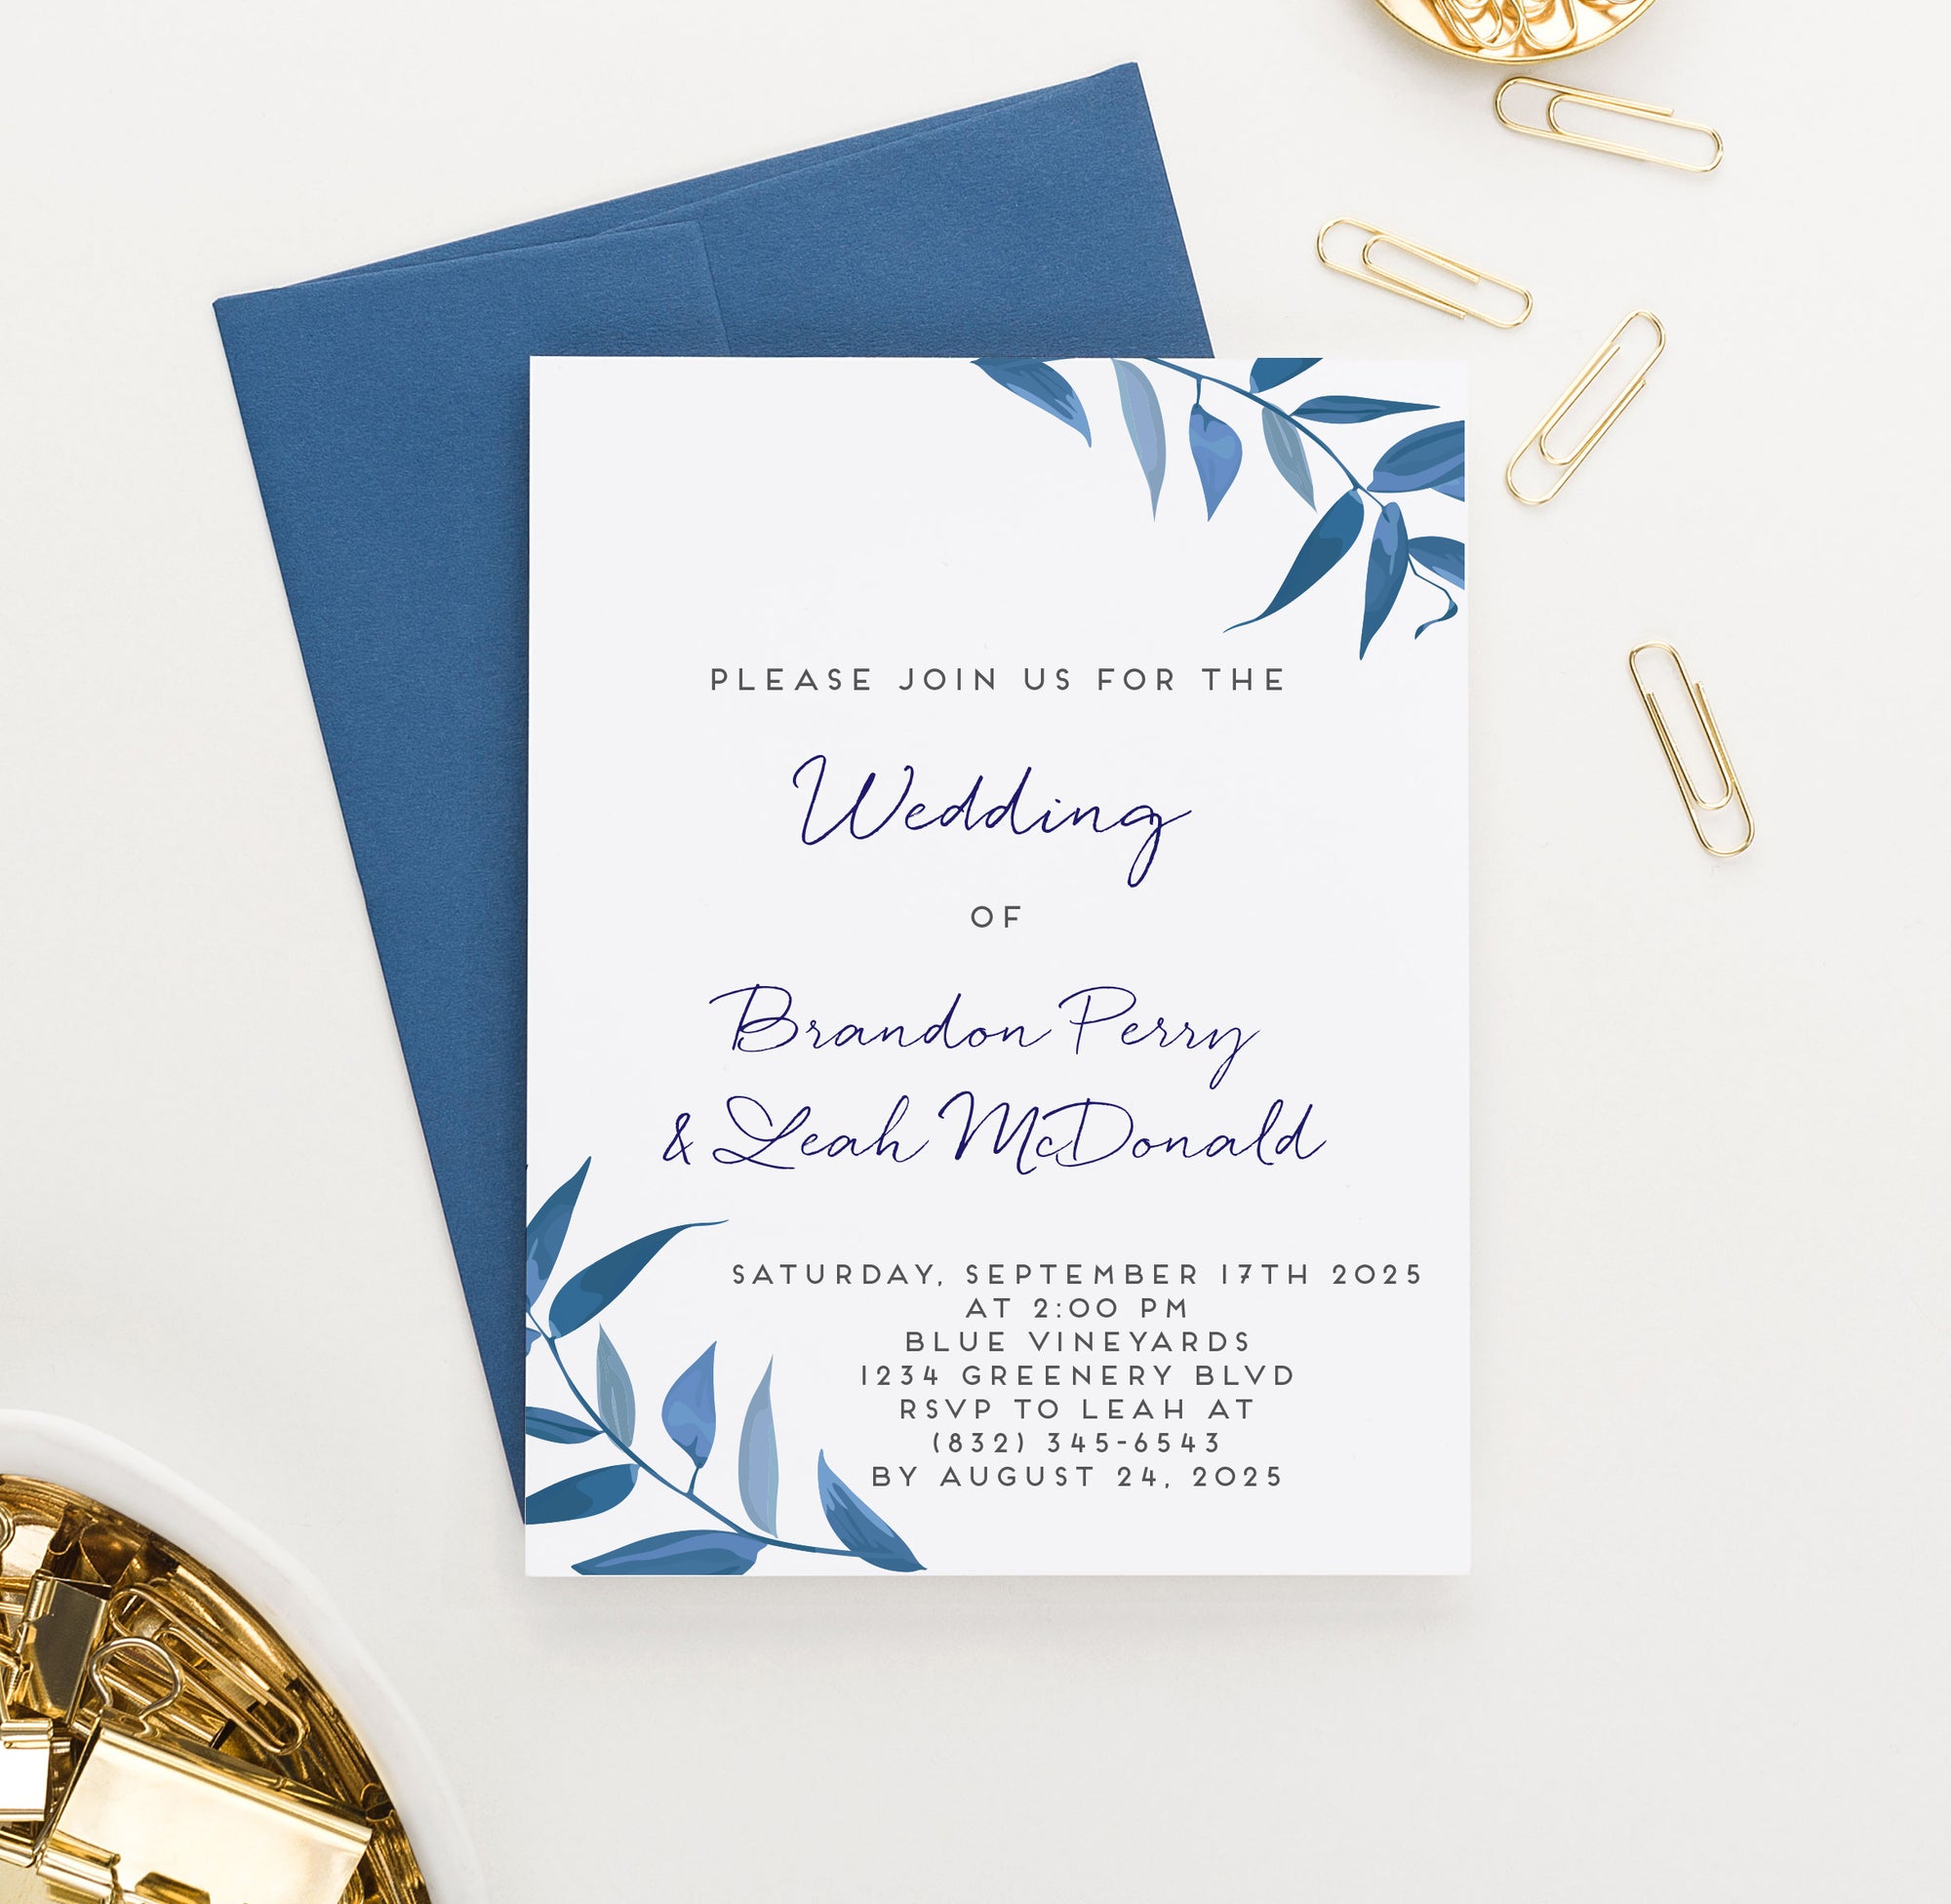 WI029 Classic Blue Greenery Wedding Invitations Customized classy elegant invites marriage